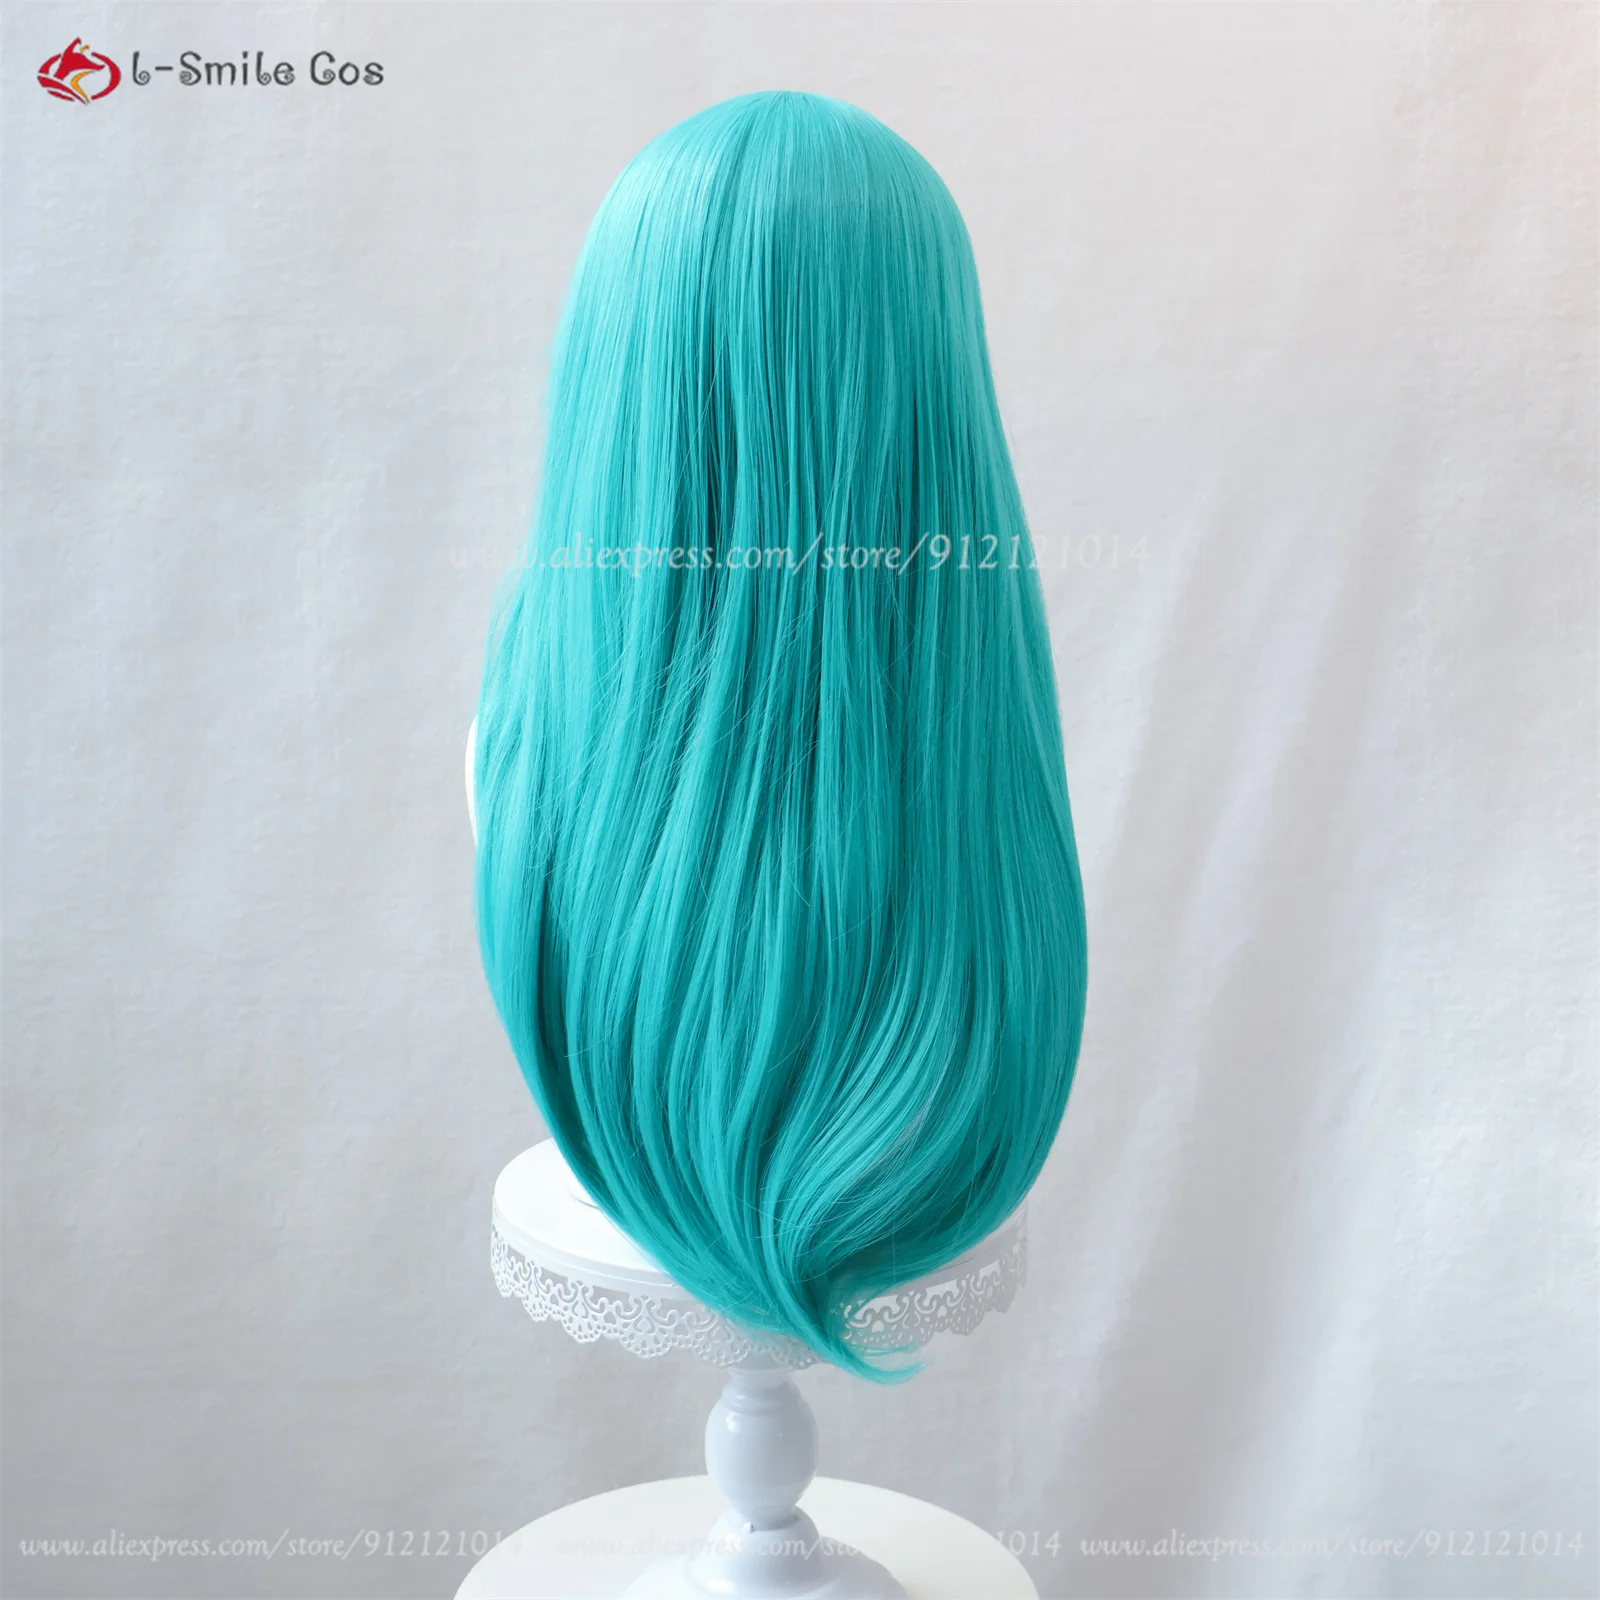 Anime Bulma Buruma Cosplay Wig Long Green Wavy Women Wigs Heat Resistant Synthetic Hair Halloween Costume Party Wigs + Wig Cap